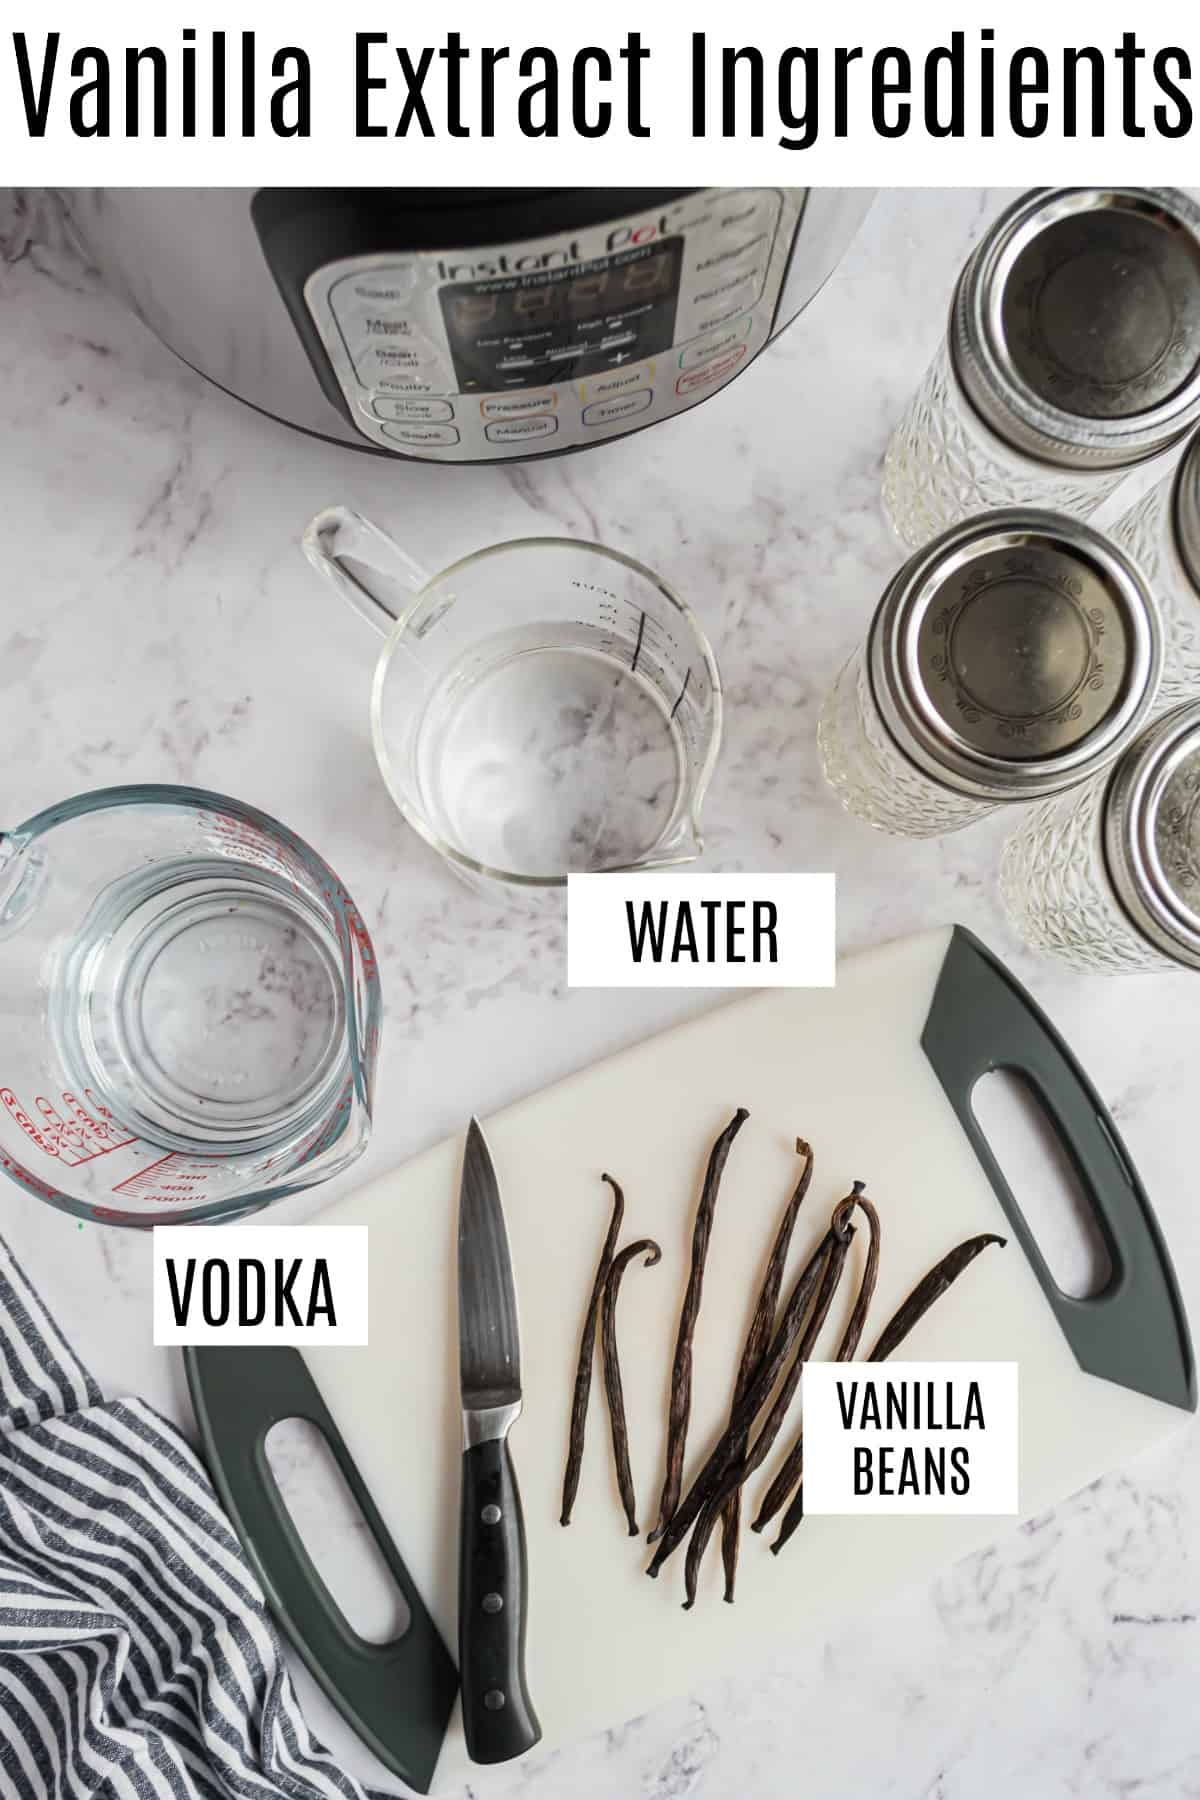 Ingredients needed for homemade vanilla extract.